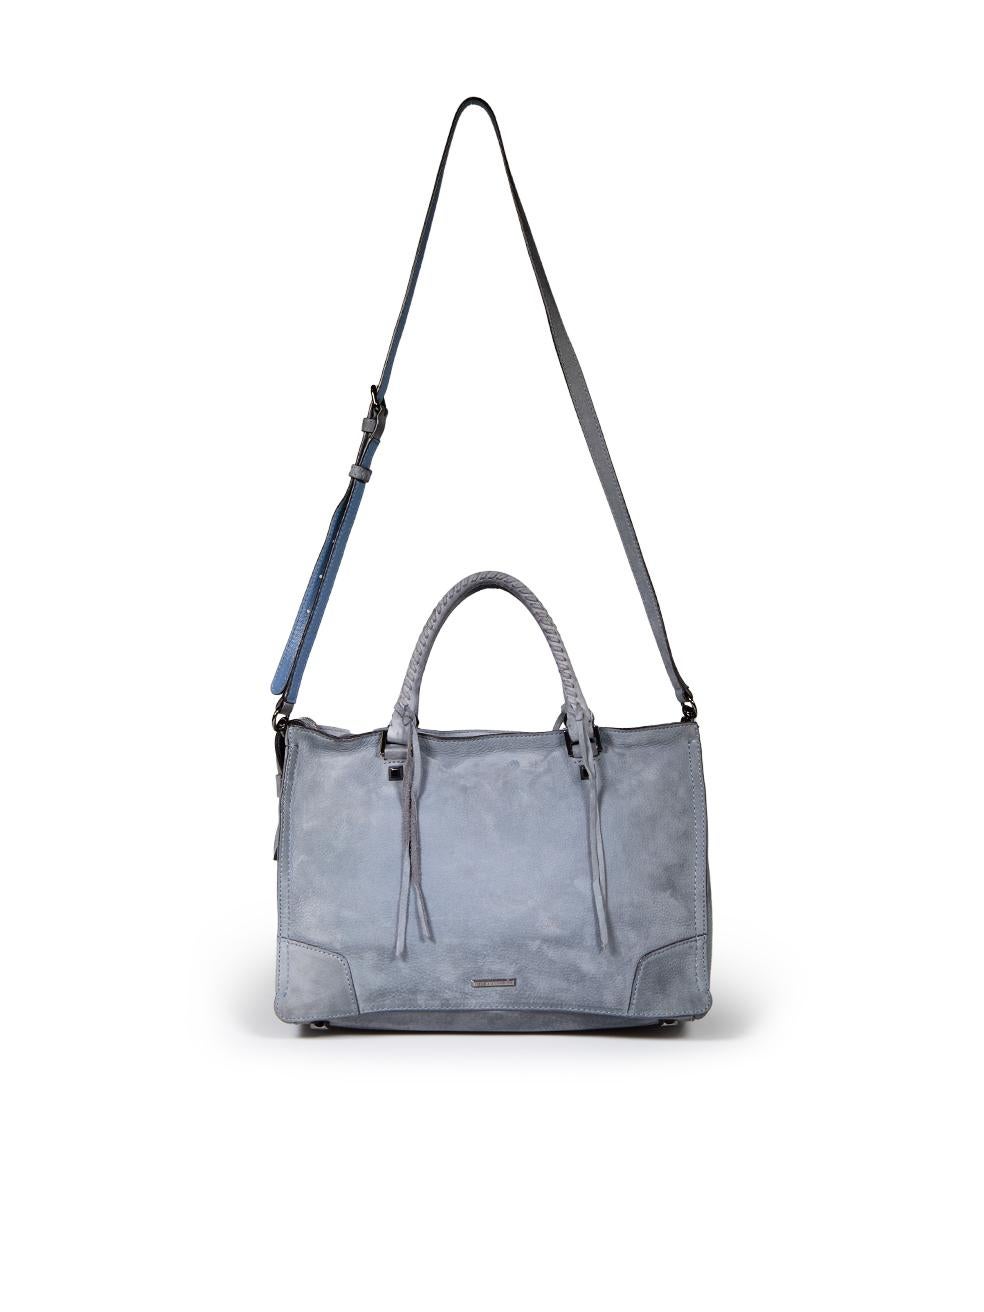 Rebecca Minkoff Grey Suede Medium Handbag In Good Condition For Sale In London, GB